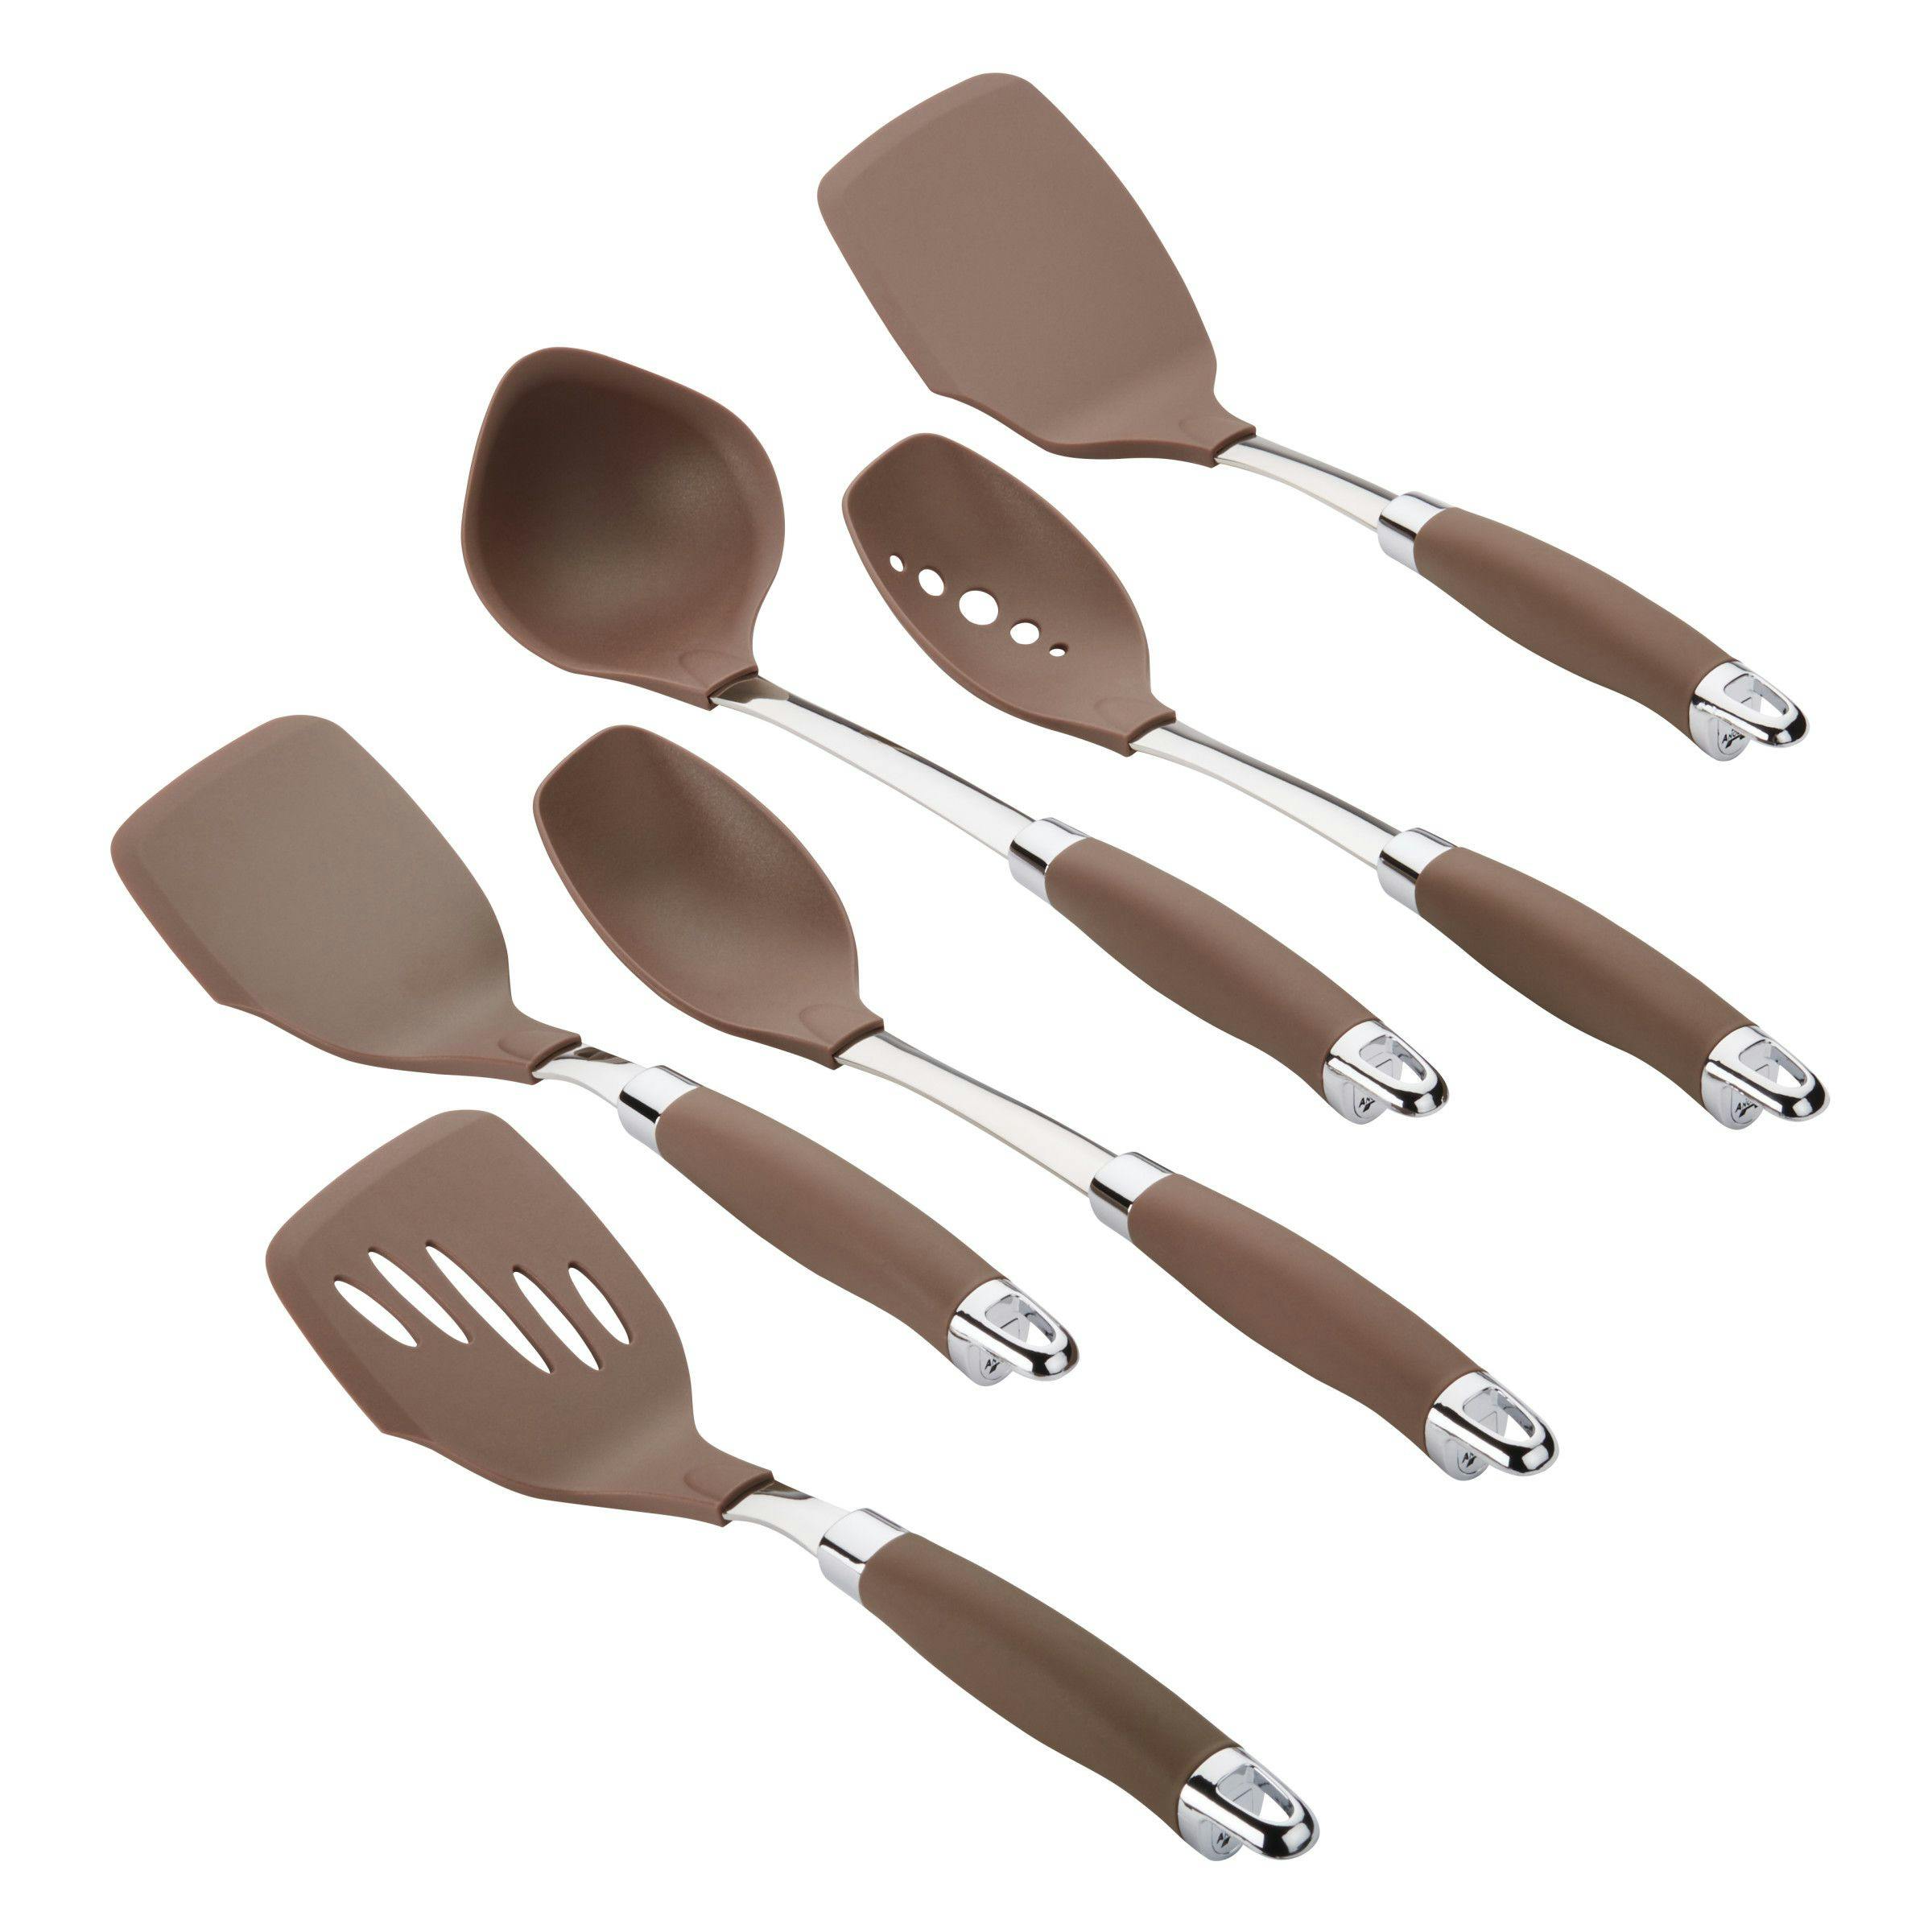 Anolon Tools and Gadgets SureGrip Nonstick Kitchen Utensil Set, 6-Piece, Bronze